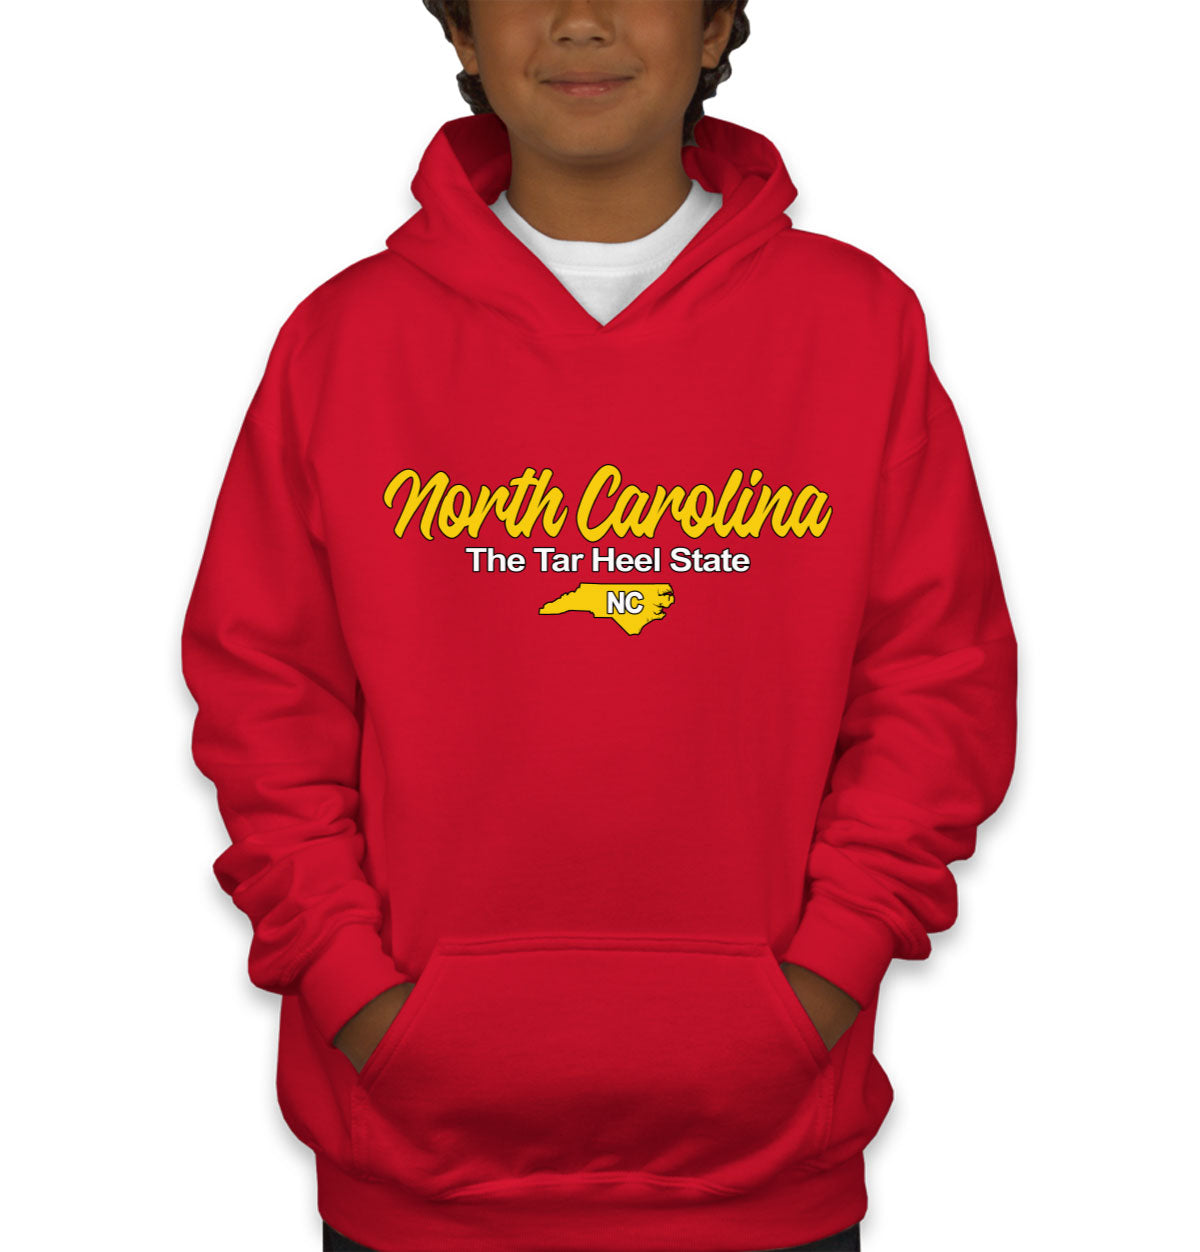 North Carolina The Tar Heel State Youth Hoodie